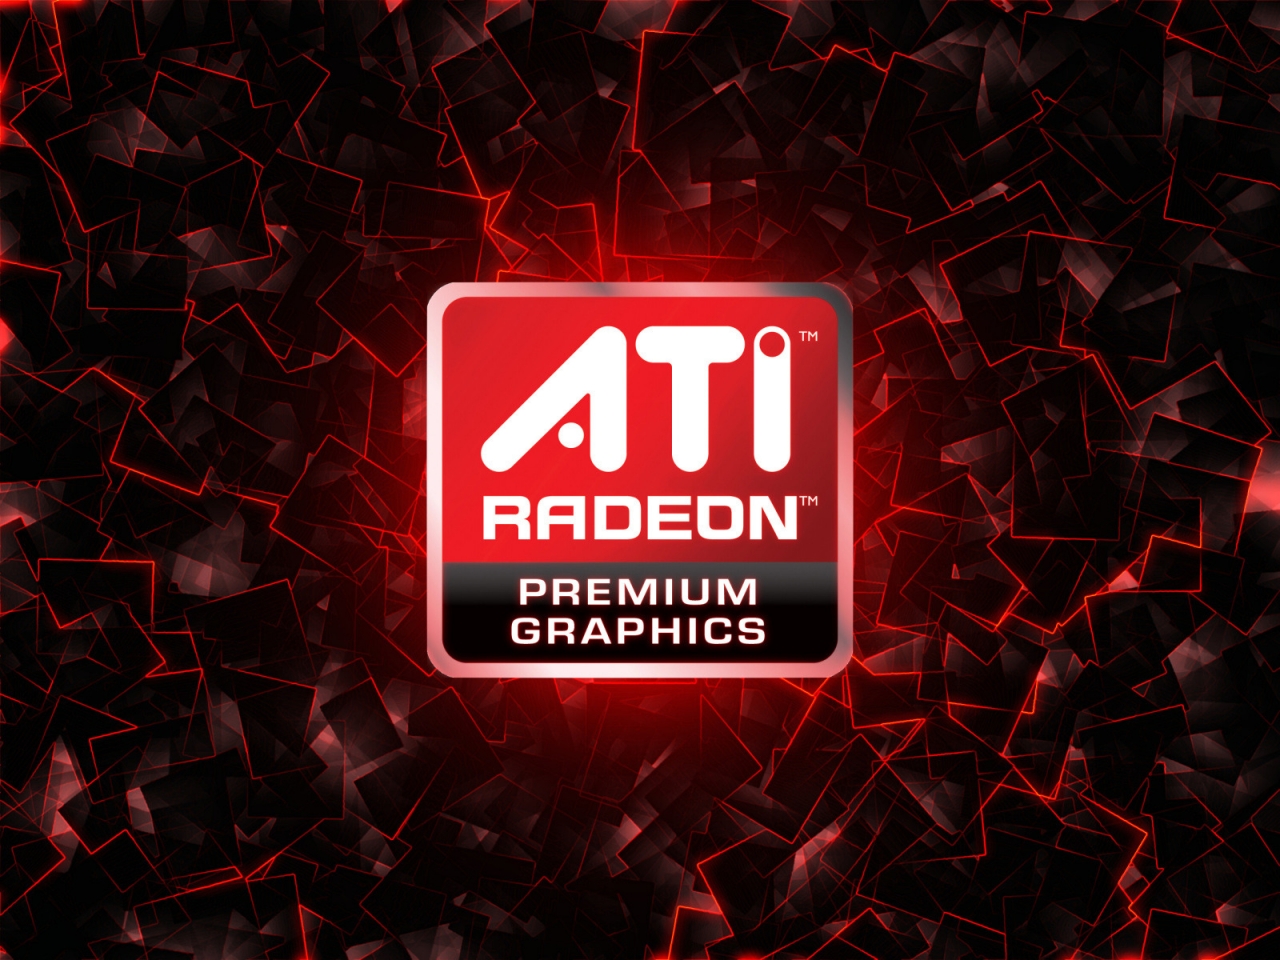 ATI Radeon Premium Graphics for 1280 x 960 resolution